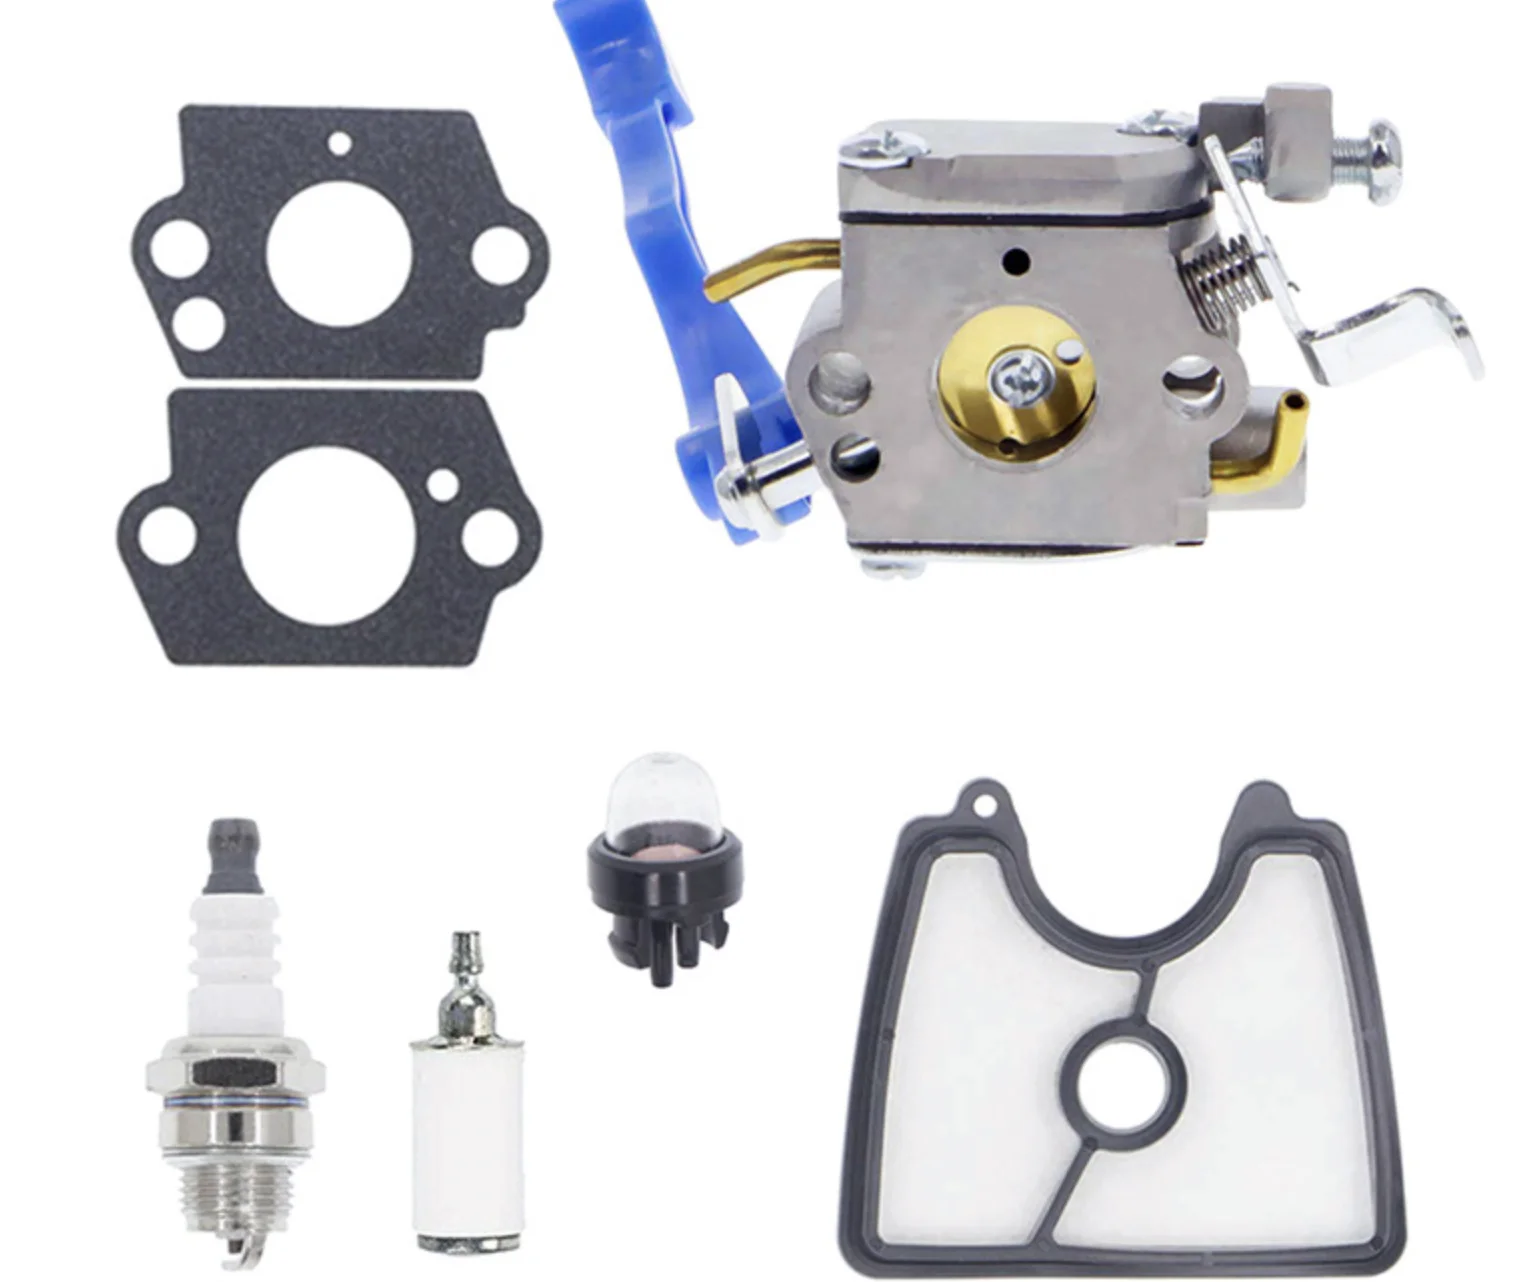 

Carburetor Gasket Kit For Husqvarna 125B 125BX 125BVX Leaf Blower Replacement #C1Q-W37 545 08 18-11 w/Air Fuel Filter Spark Plug